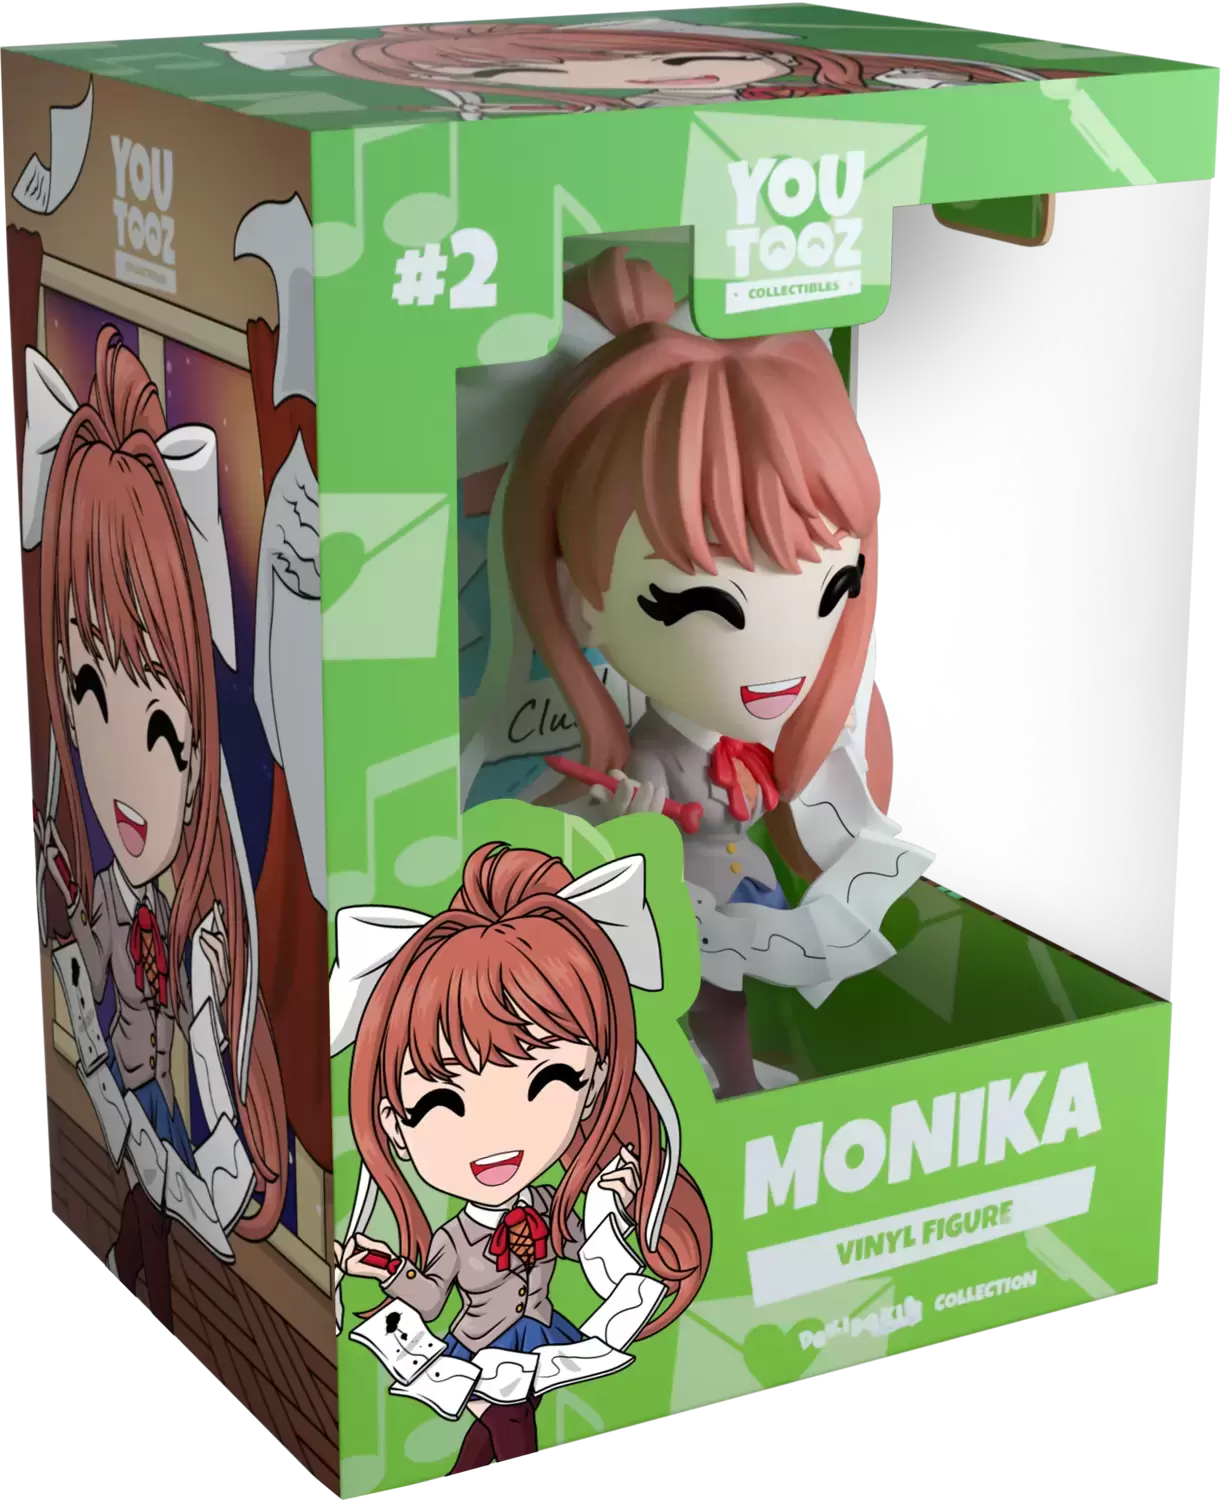 Doki Doki Literature Club! Pop Up Parade Monika